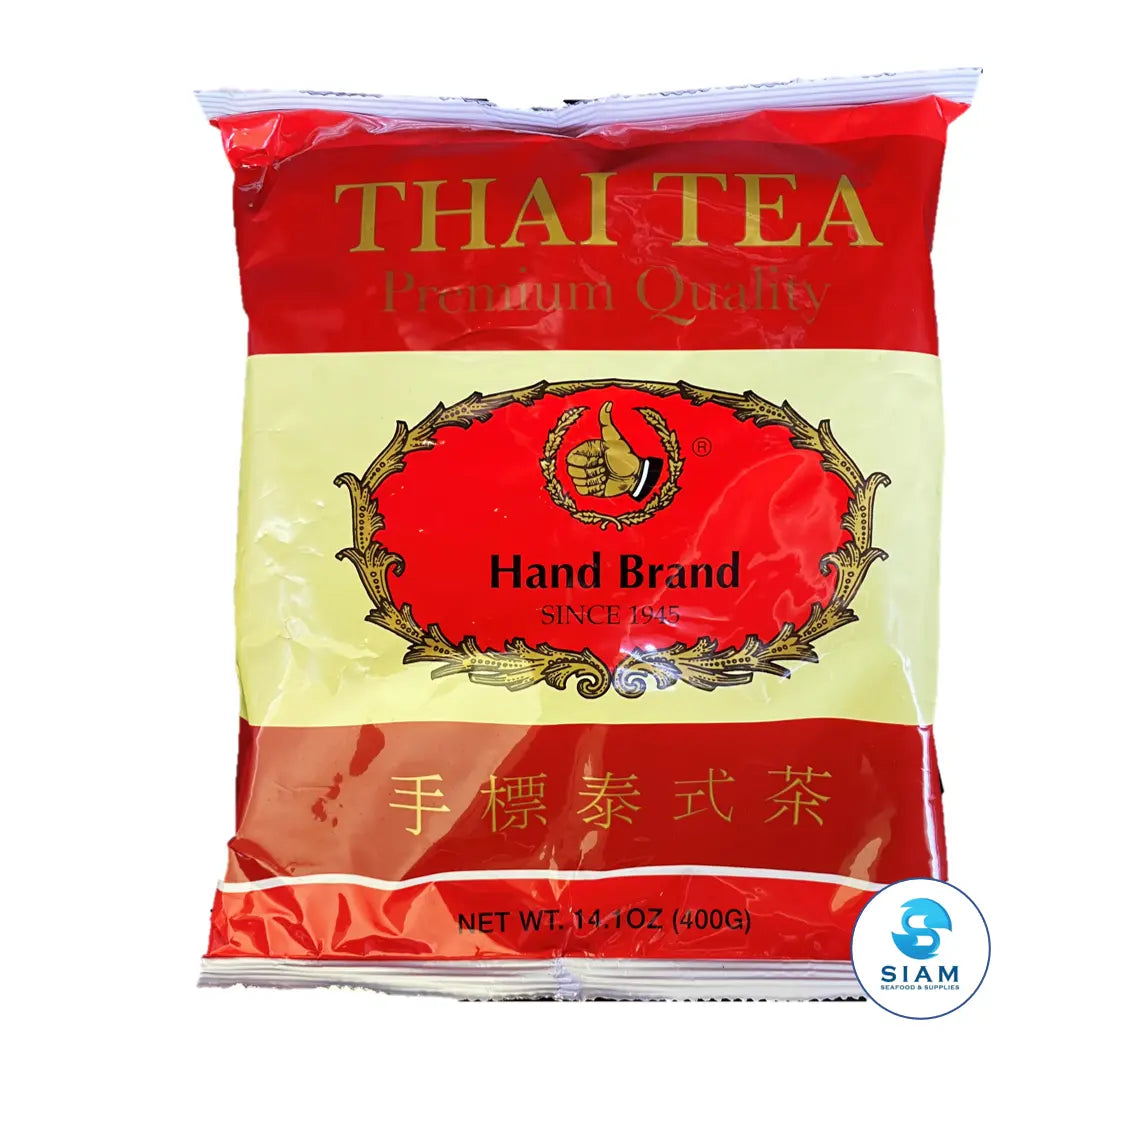 Thai Tea Mix, Large - Hand Brand (14.1 oz-Net Wt 14.6 oz) ชาผงปรุงสำเร็จ (ถุงใหญ่) แฮนด์แบรนด์Shippable Hand Brand